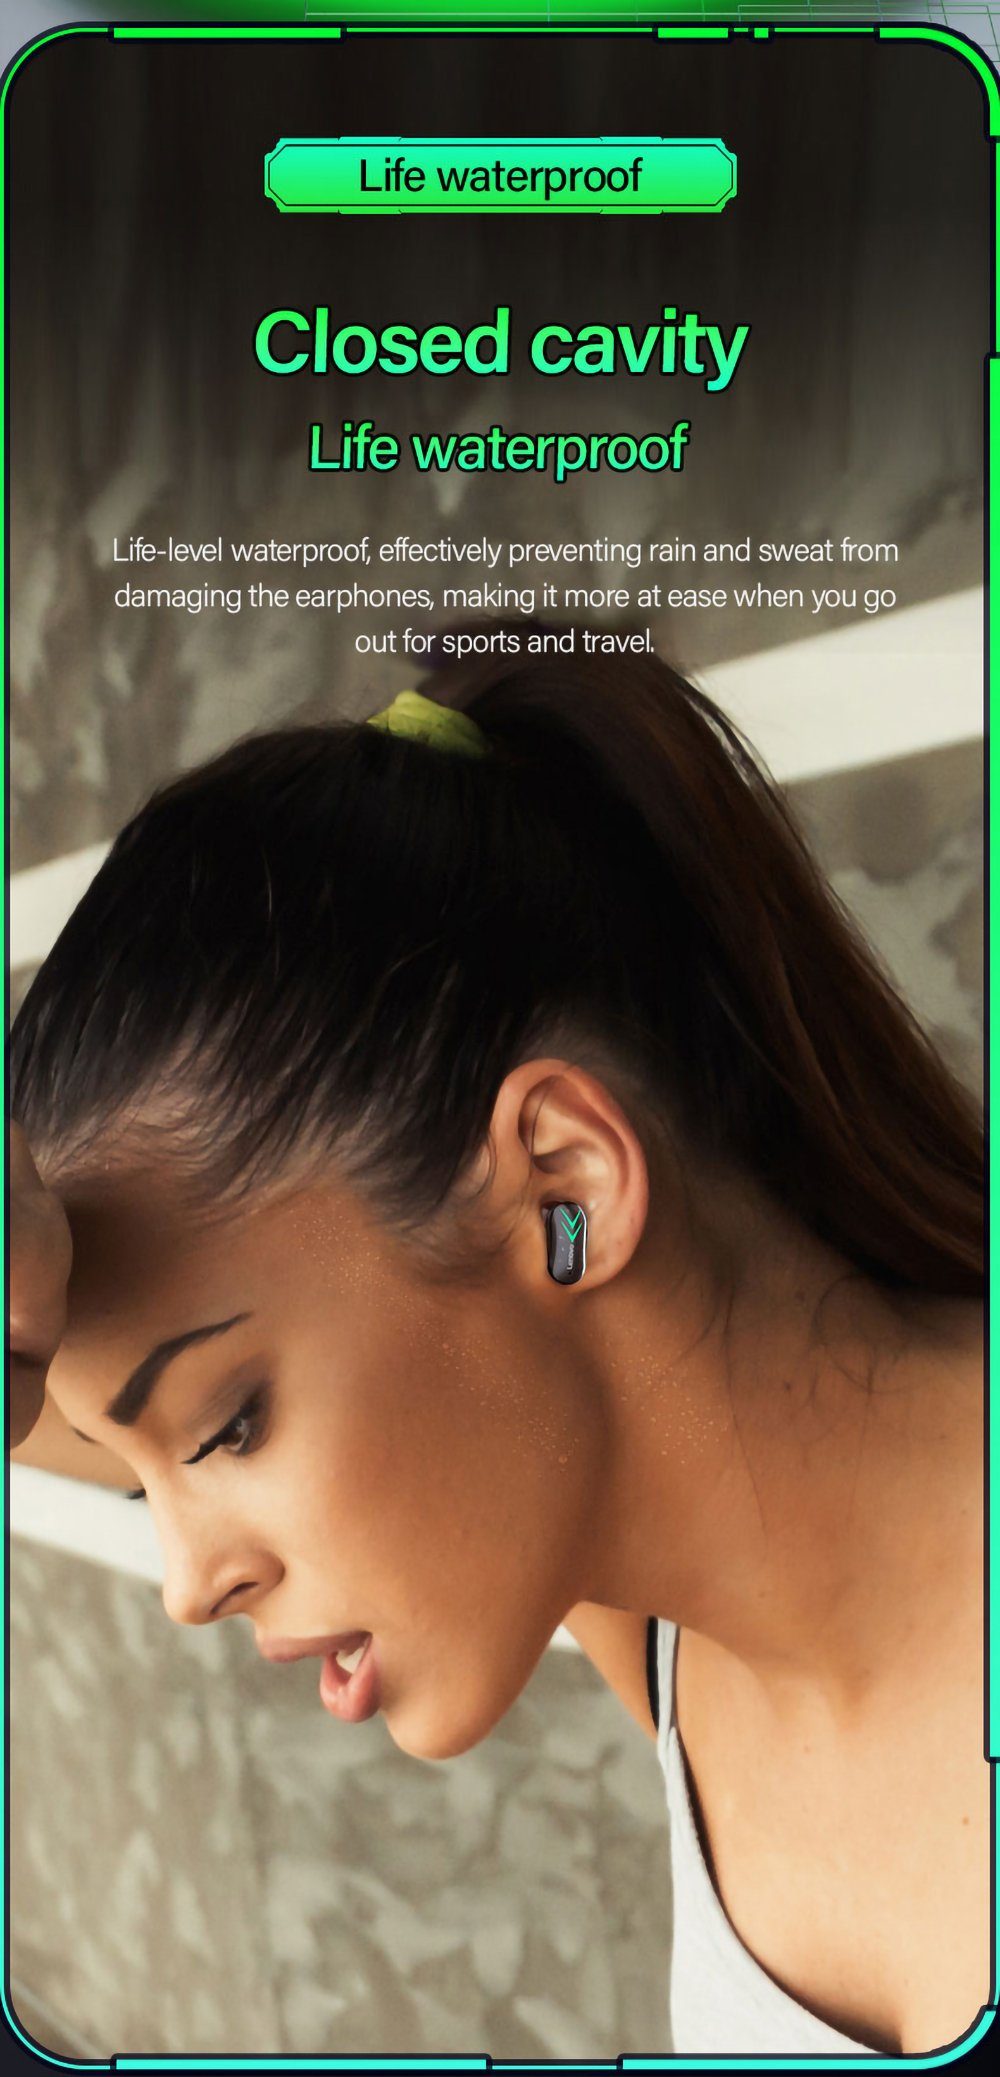 Wireless, mit Bluetooth Assistant, - Lenovo kabellos, Google mAh Weiß) 300 Bluetooth-Kopfhörer (True Stereo-Ohrhörer mit Siri, 5.1, XT82 Kopfhörer-Ladehülle Touch-Steuerung